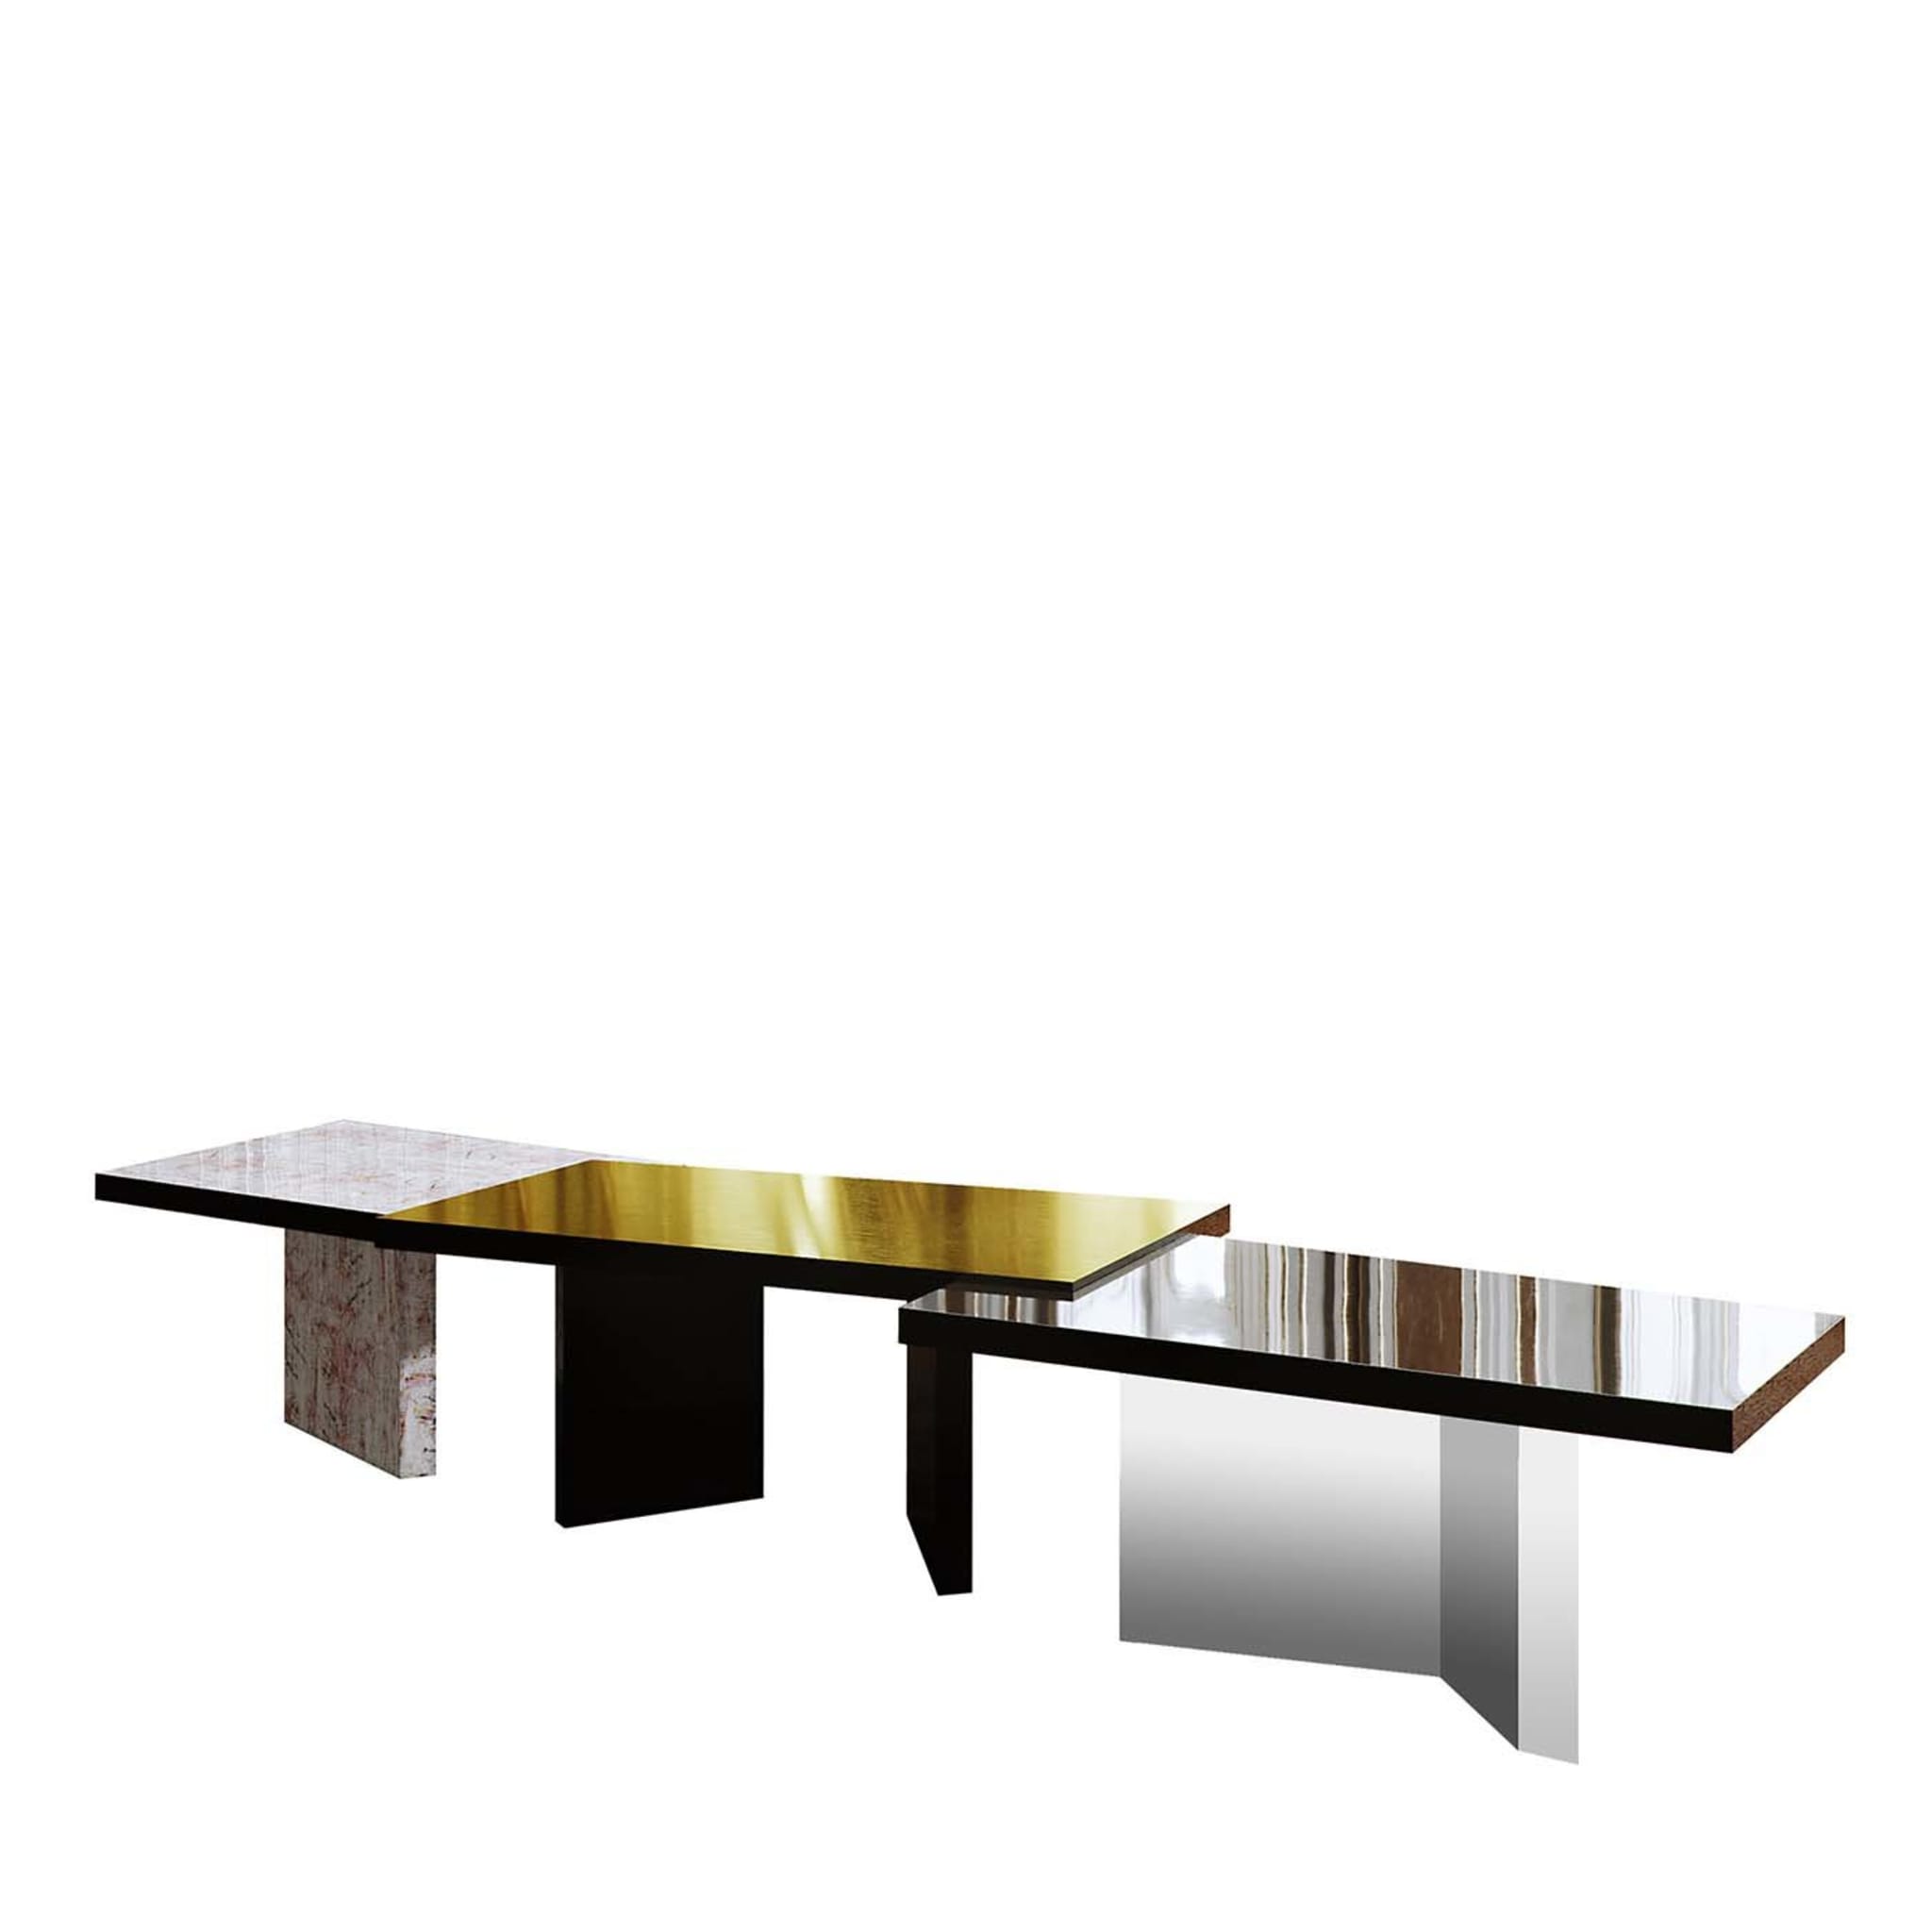 Riflessi Sculptural Table #3 by Gianna Farina - Main view